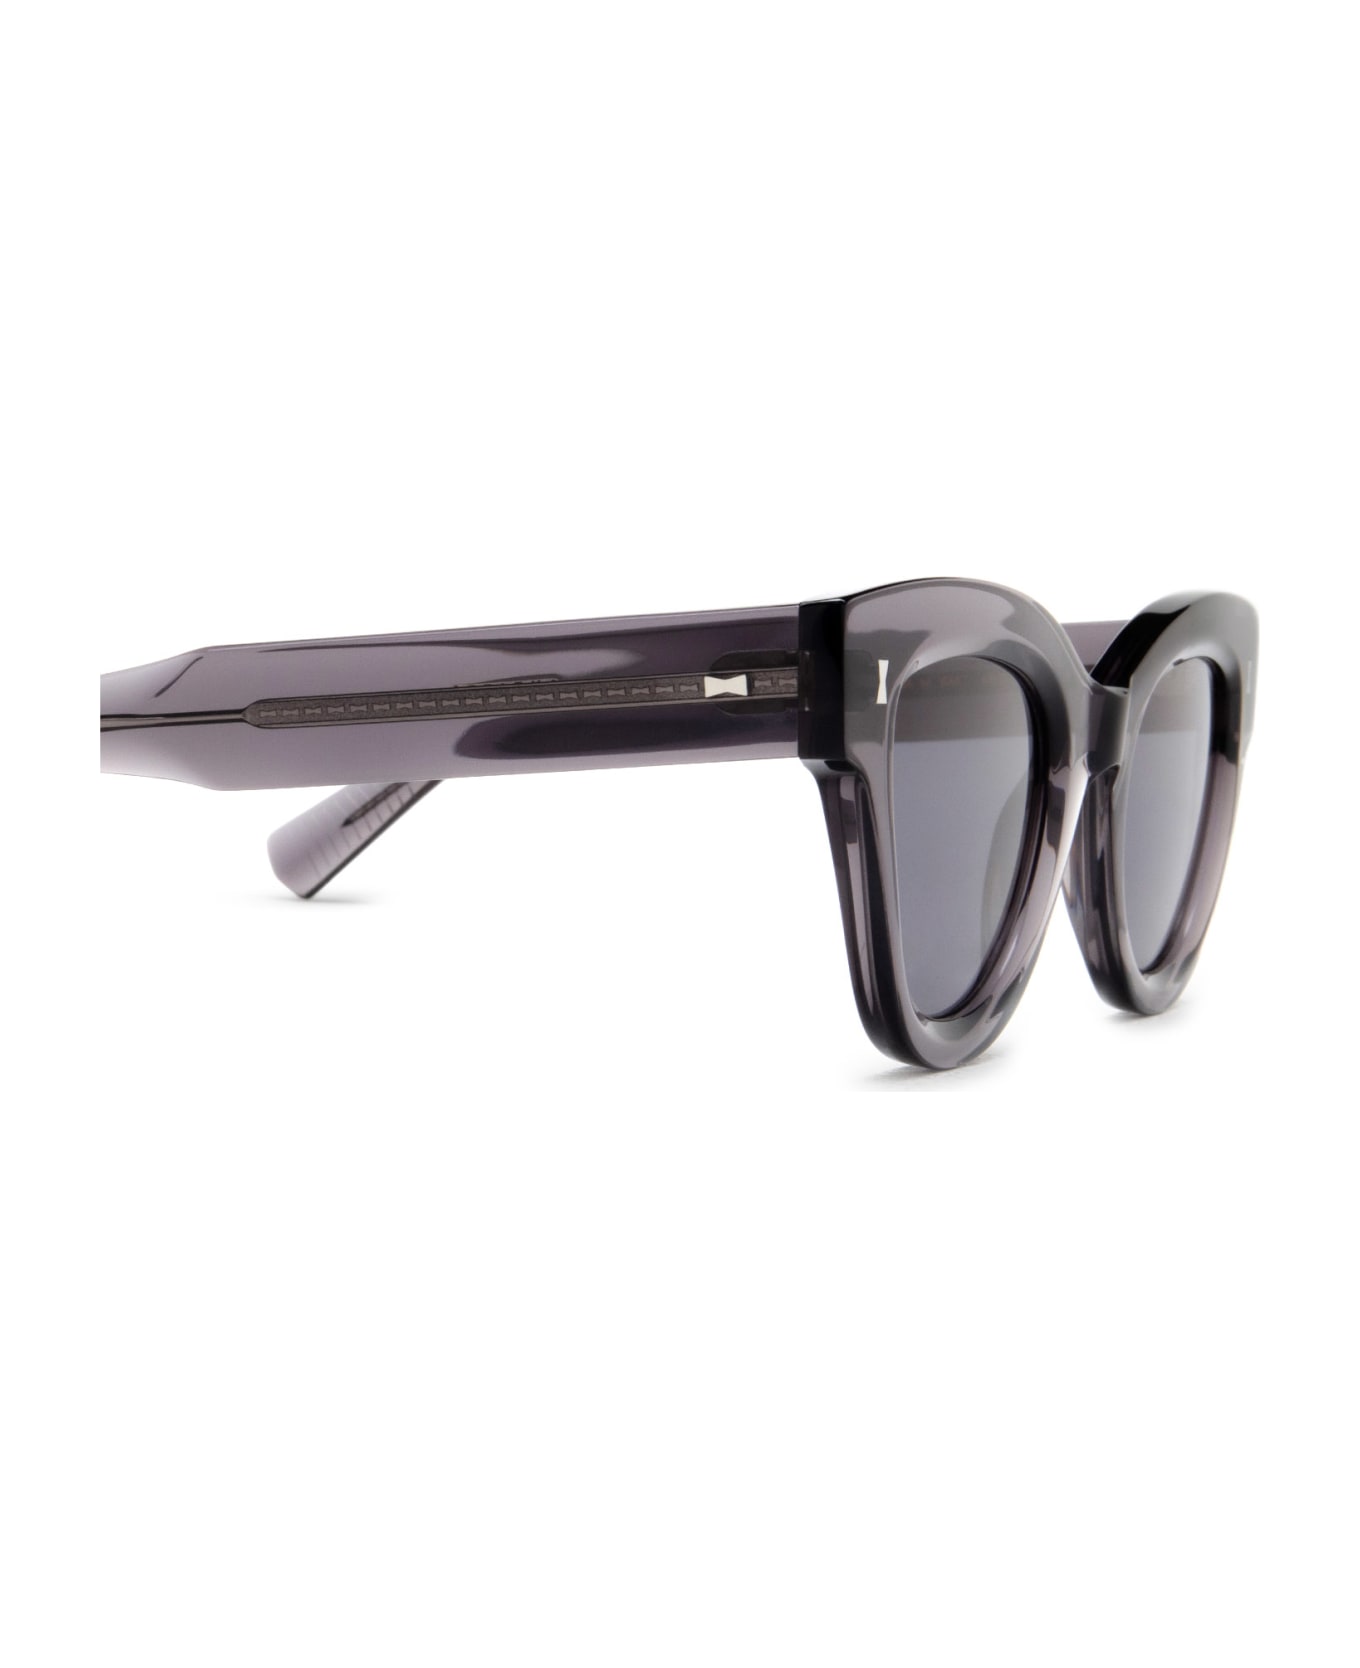 Cubitts Georgiana Sun Smoke Grey Sunglasses - Smoke Grey